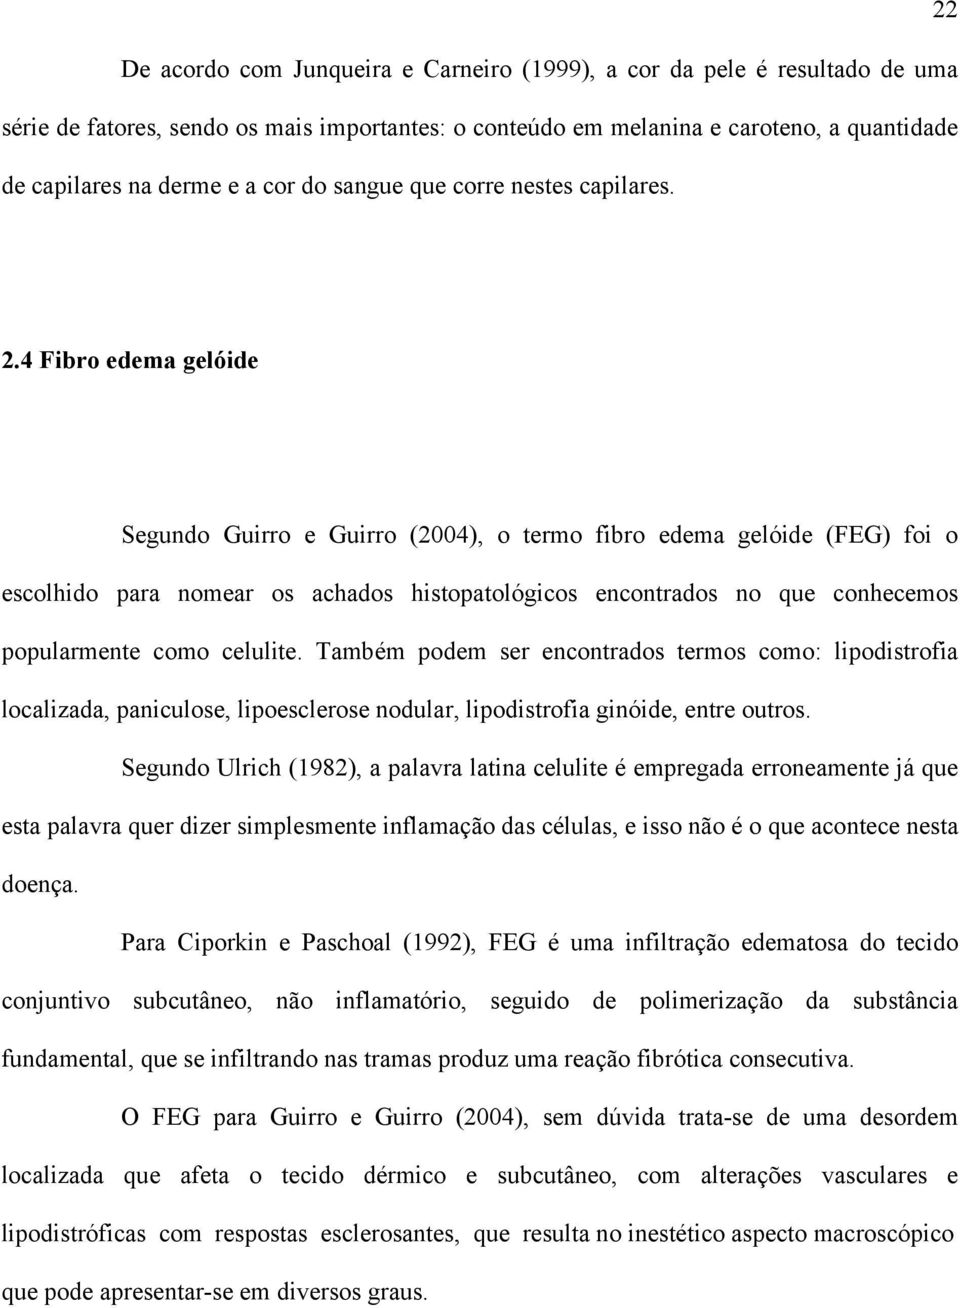 4 Fibro edema gelóide Segundo Guirro e Guirro (2004), o termo fibro edema gelóide (FEG) foi o escolhido para nomear os achados histopatológicos encontrados no que conhecemos popularmente como